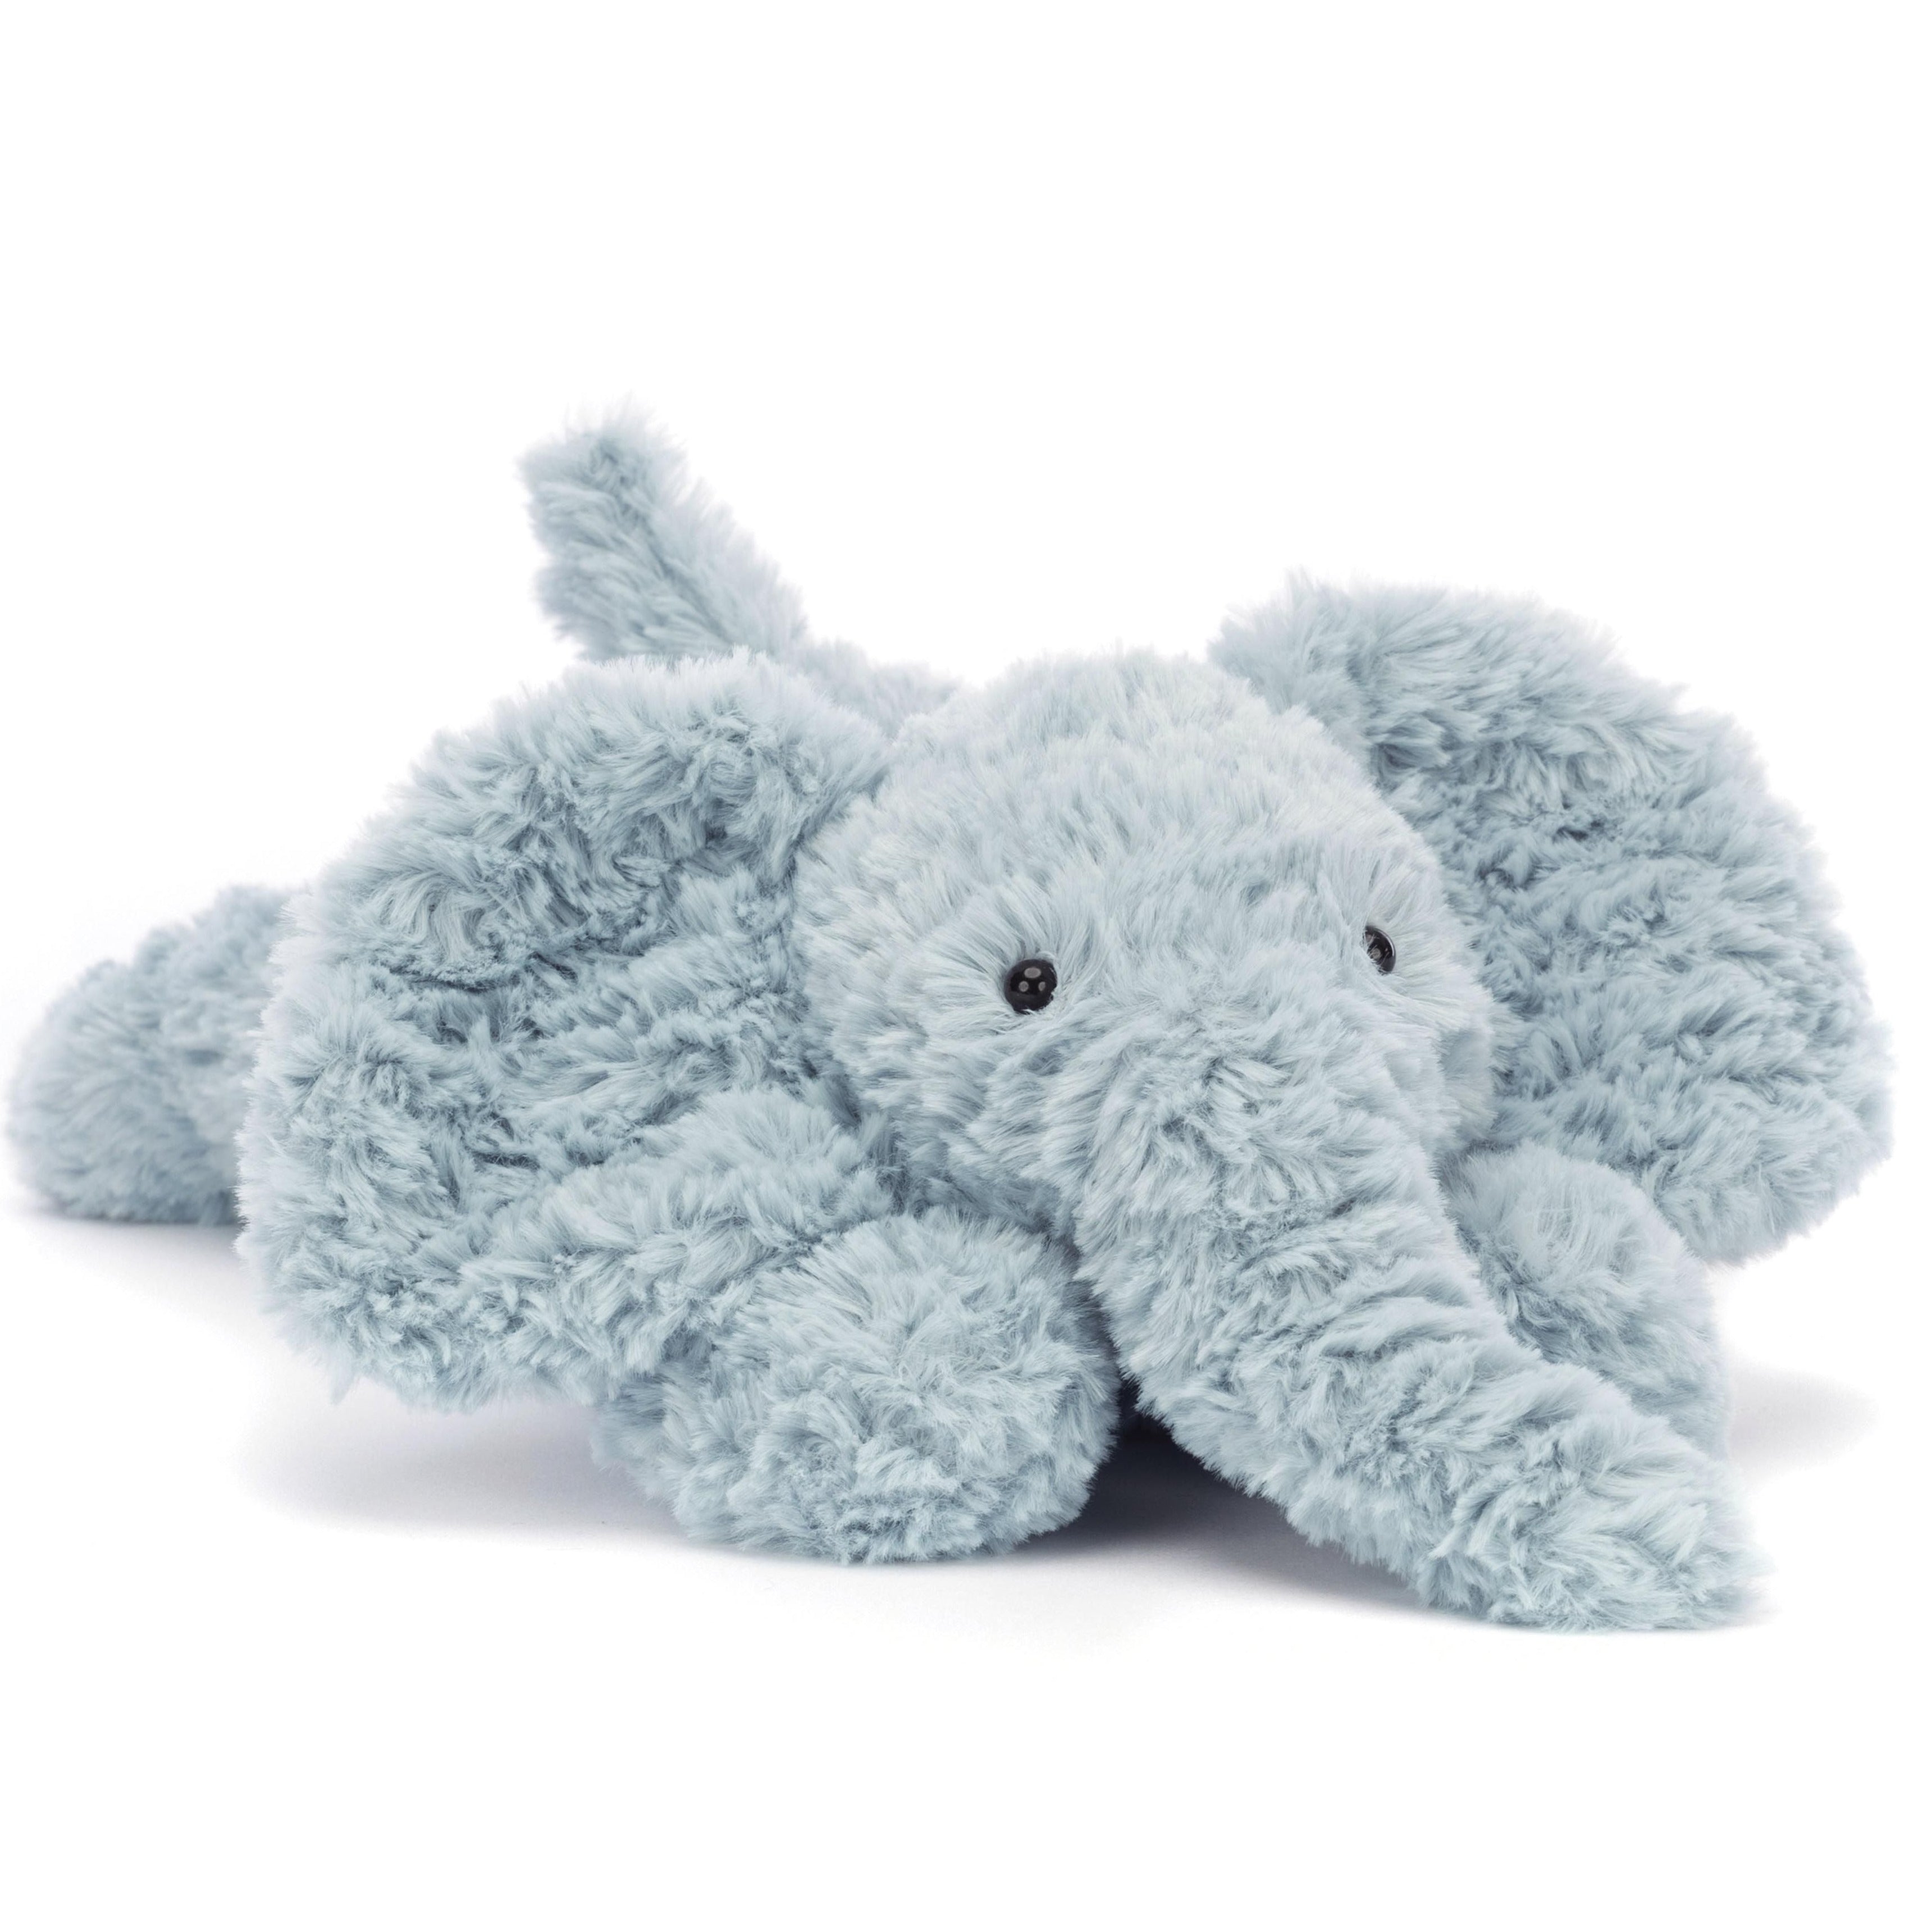 Light blue Jellycat Tumblie Elephant soft toy - at Send A Toy